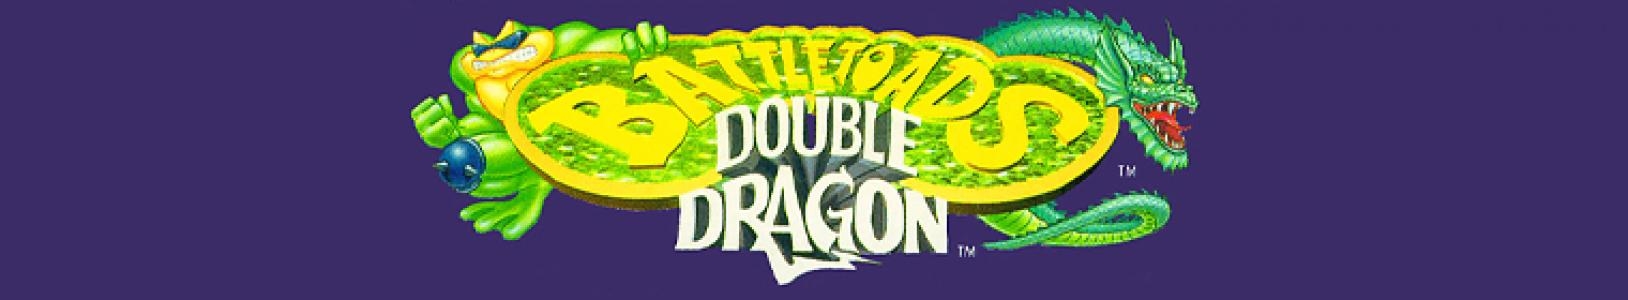 Battletoads & Double Dragon banner